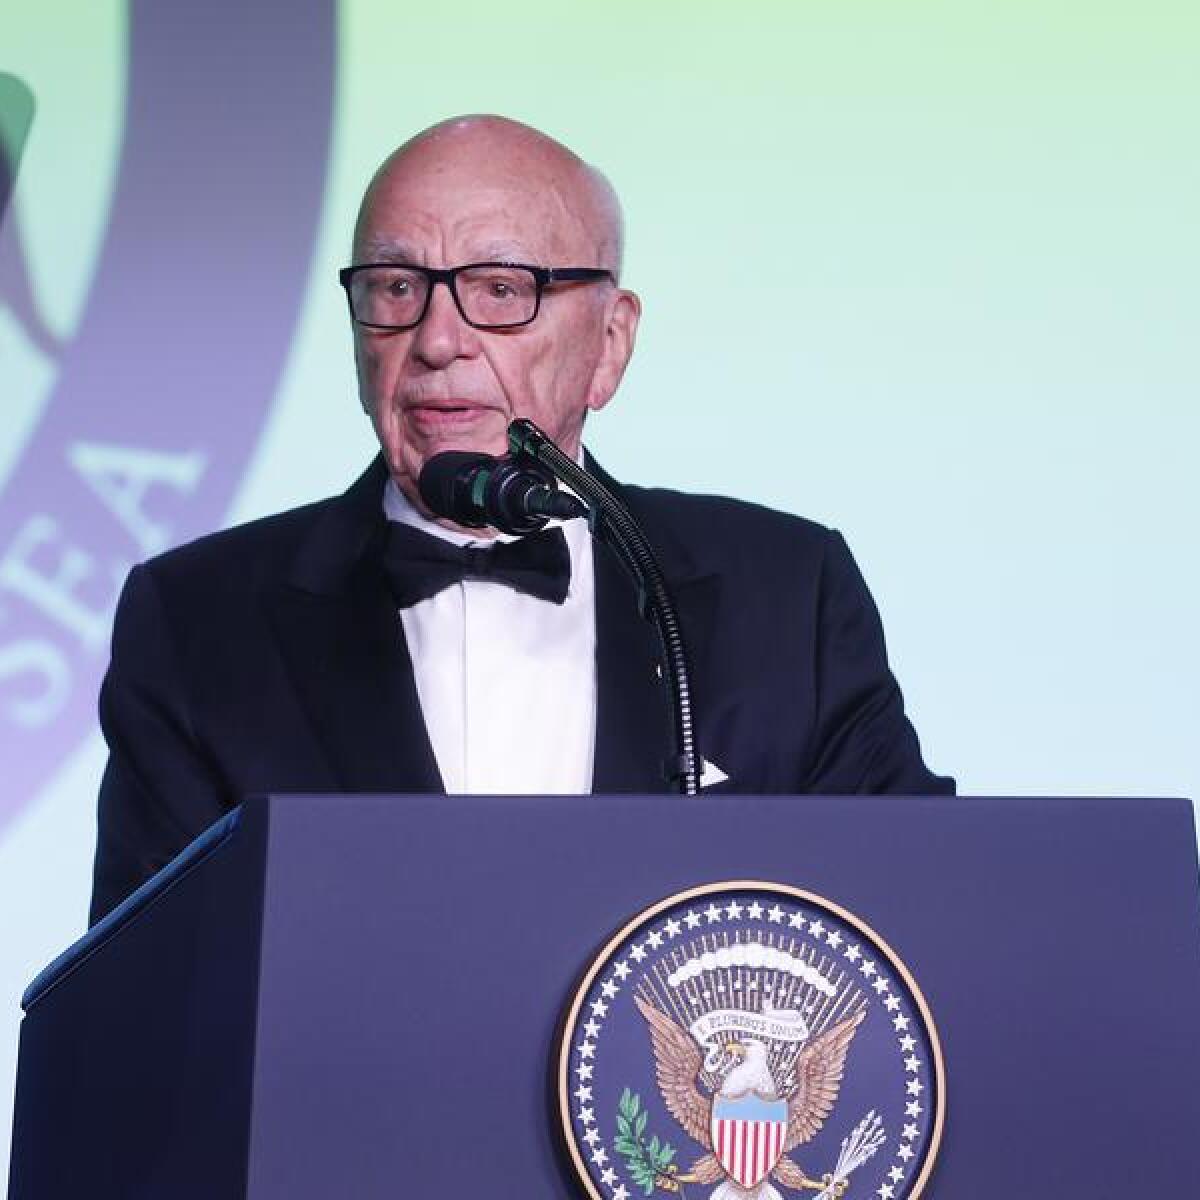 Rupert Murdoch speaking at a function